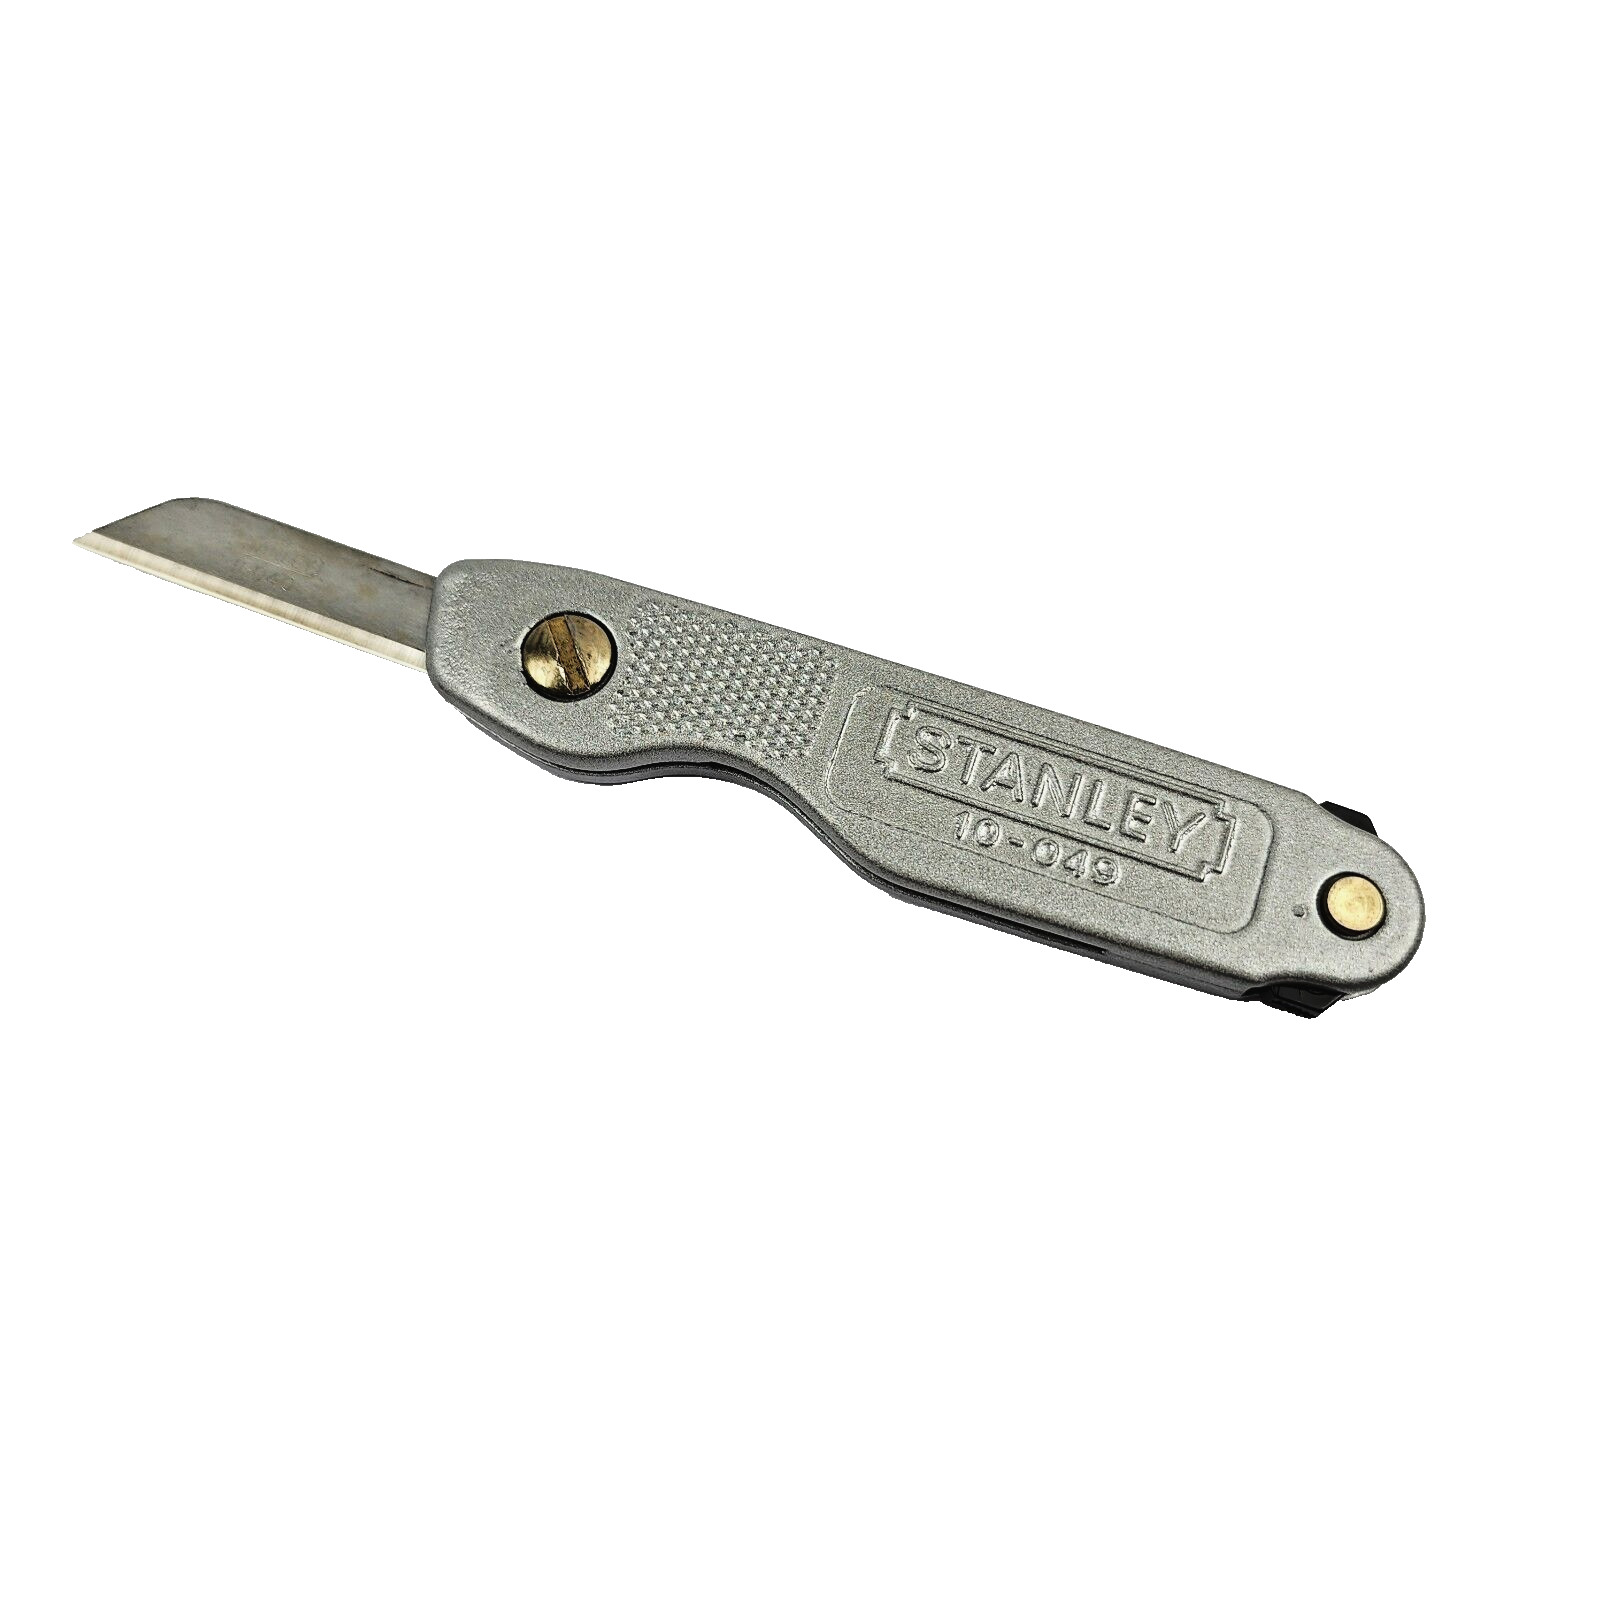 Stanley No. 10-049 Utility Pocketknife, Locking Blade